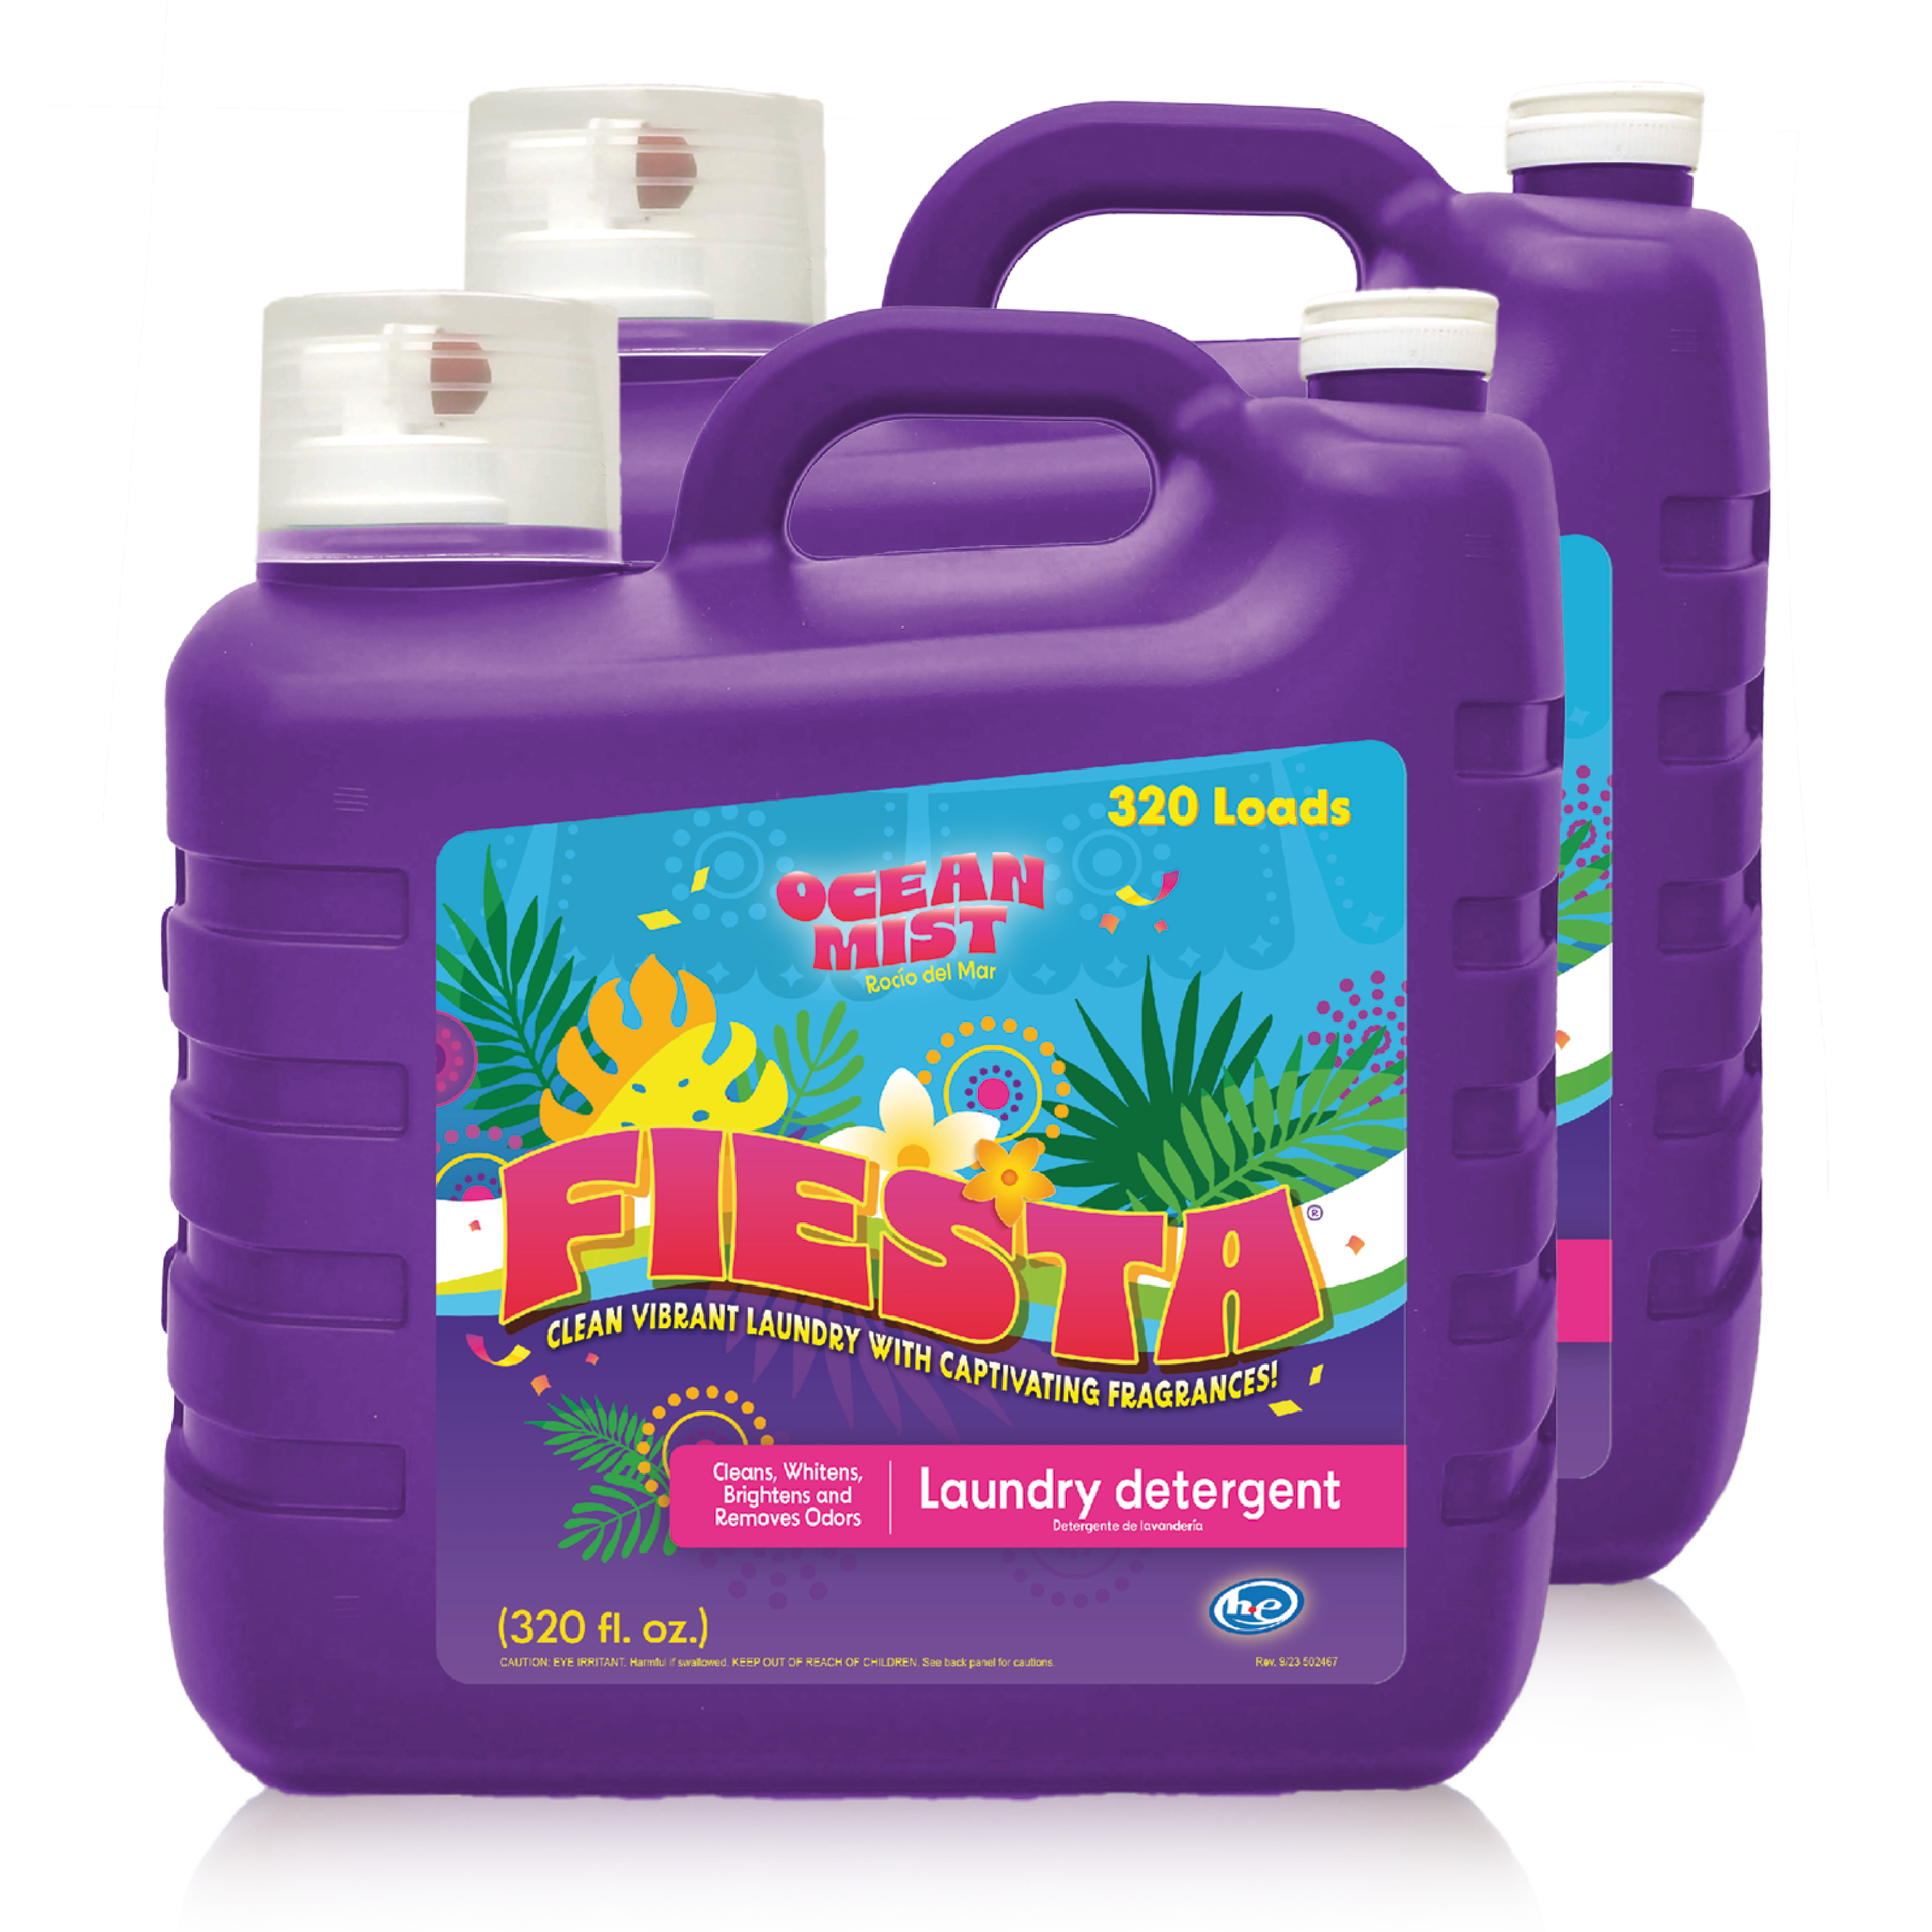 FIESTA Laundry Detergent - Ocean Mist™ - 320 oz. (Case of 2 - 640 oz. total)